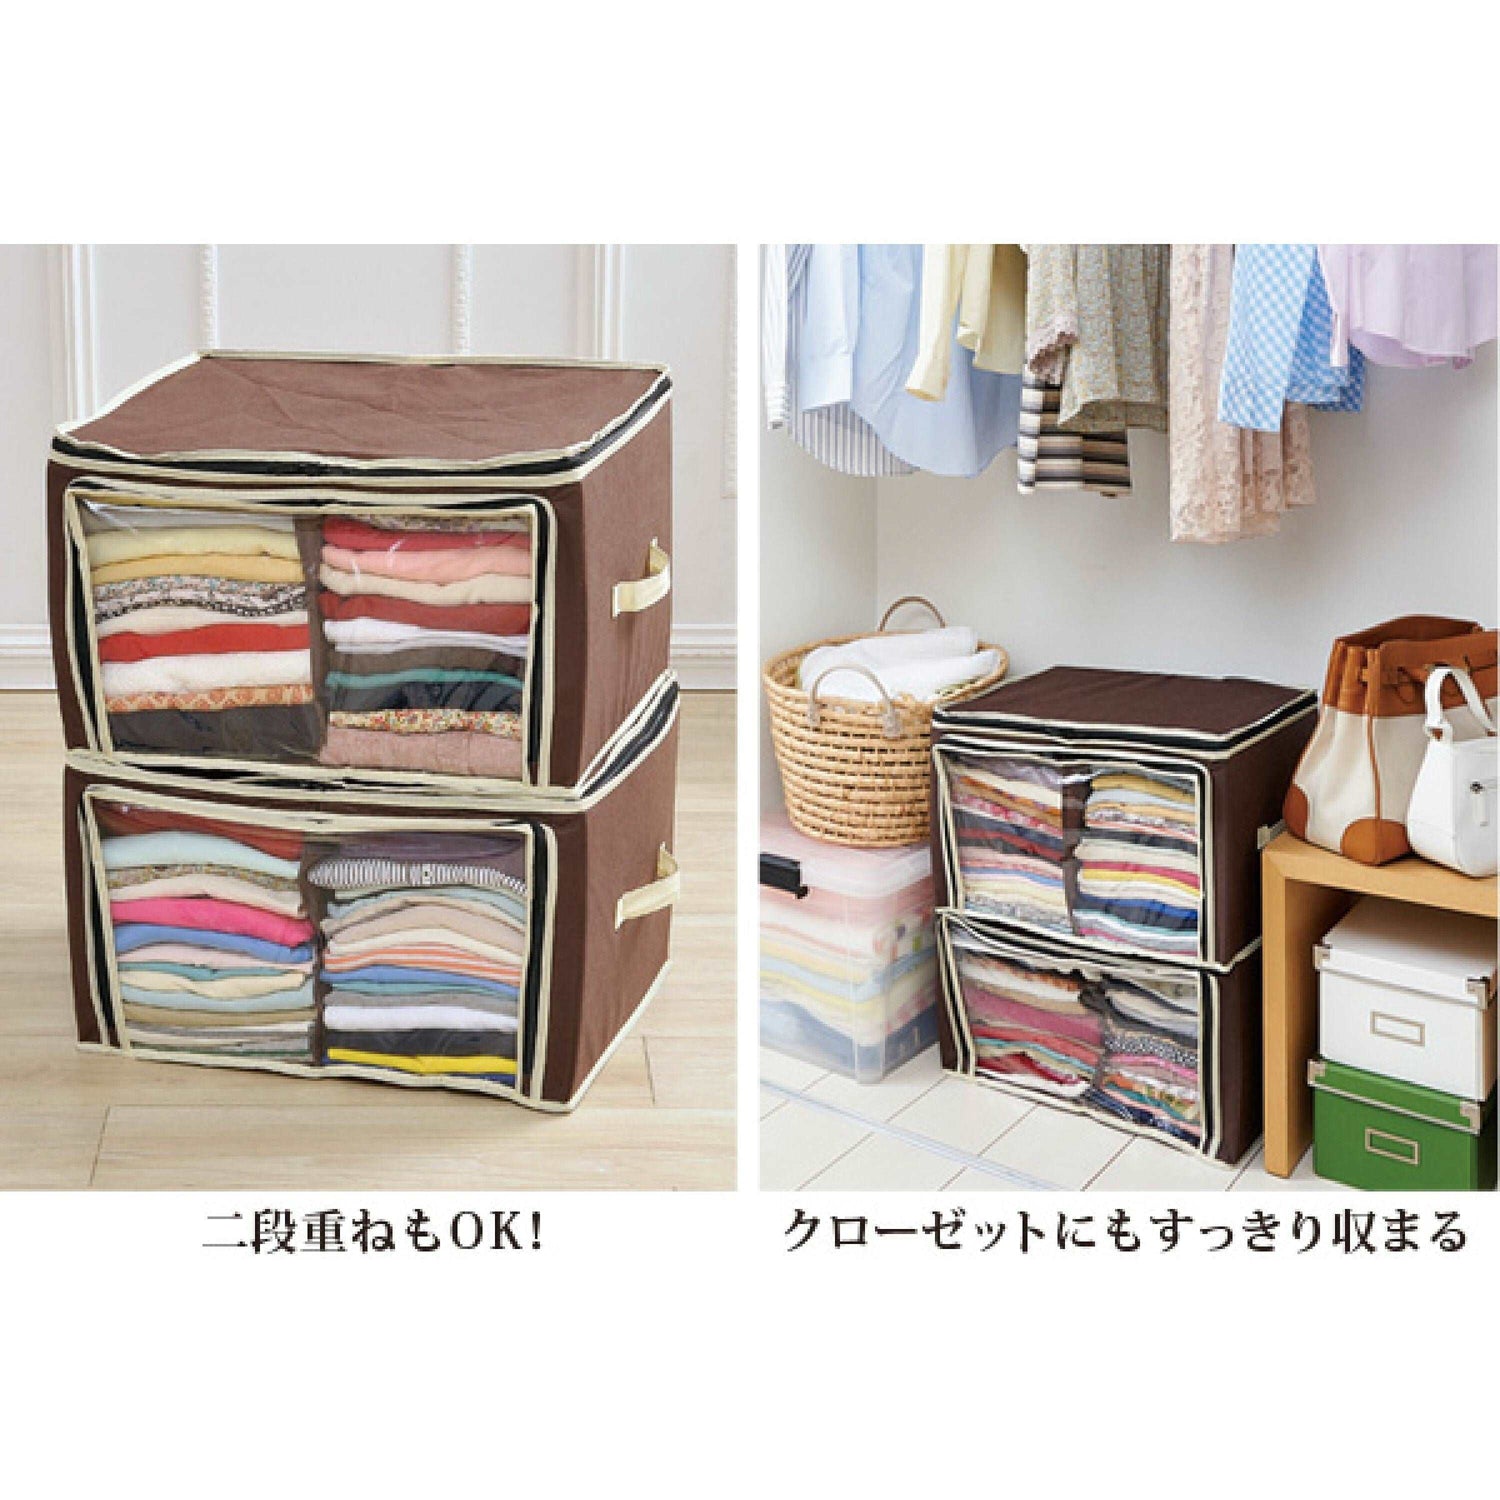 Clothing Storage Case 46 x 36 x 30cm